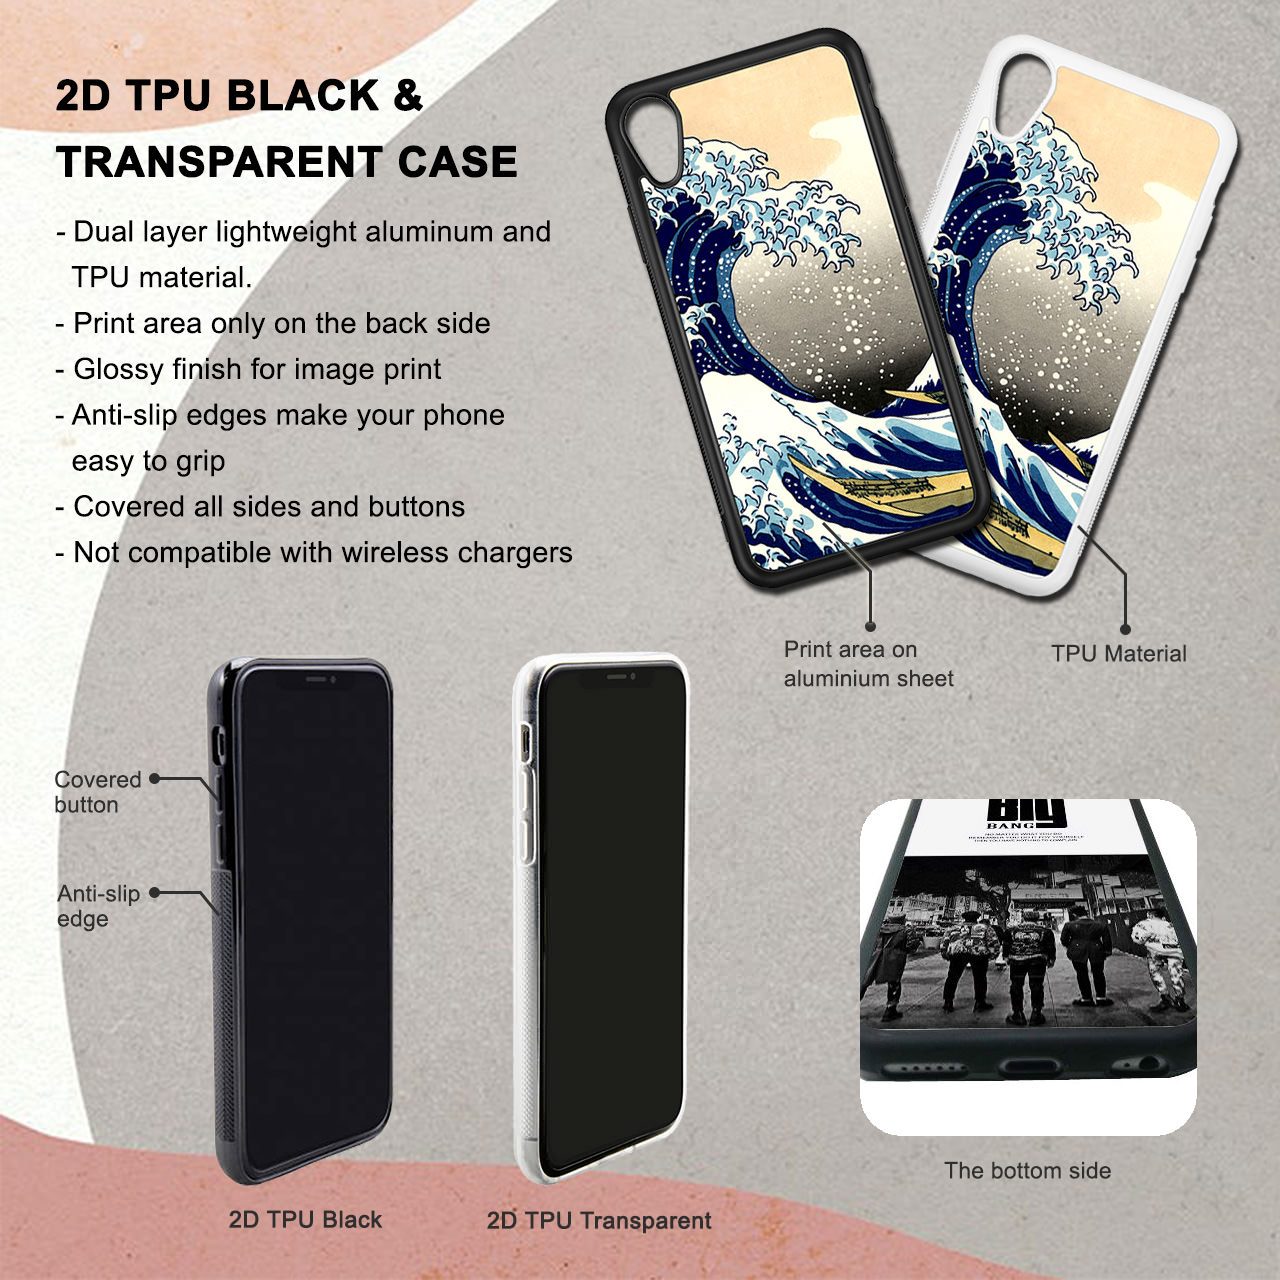 Silhouette Of Zoro In Santoryu Mode iPhone 6/6S Case